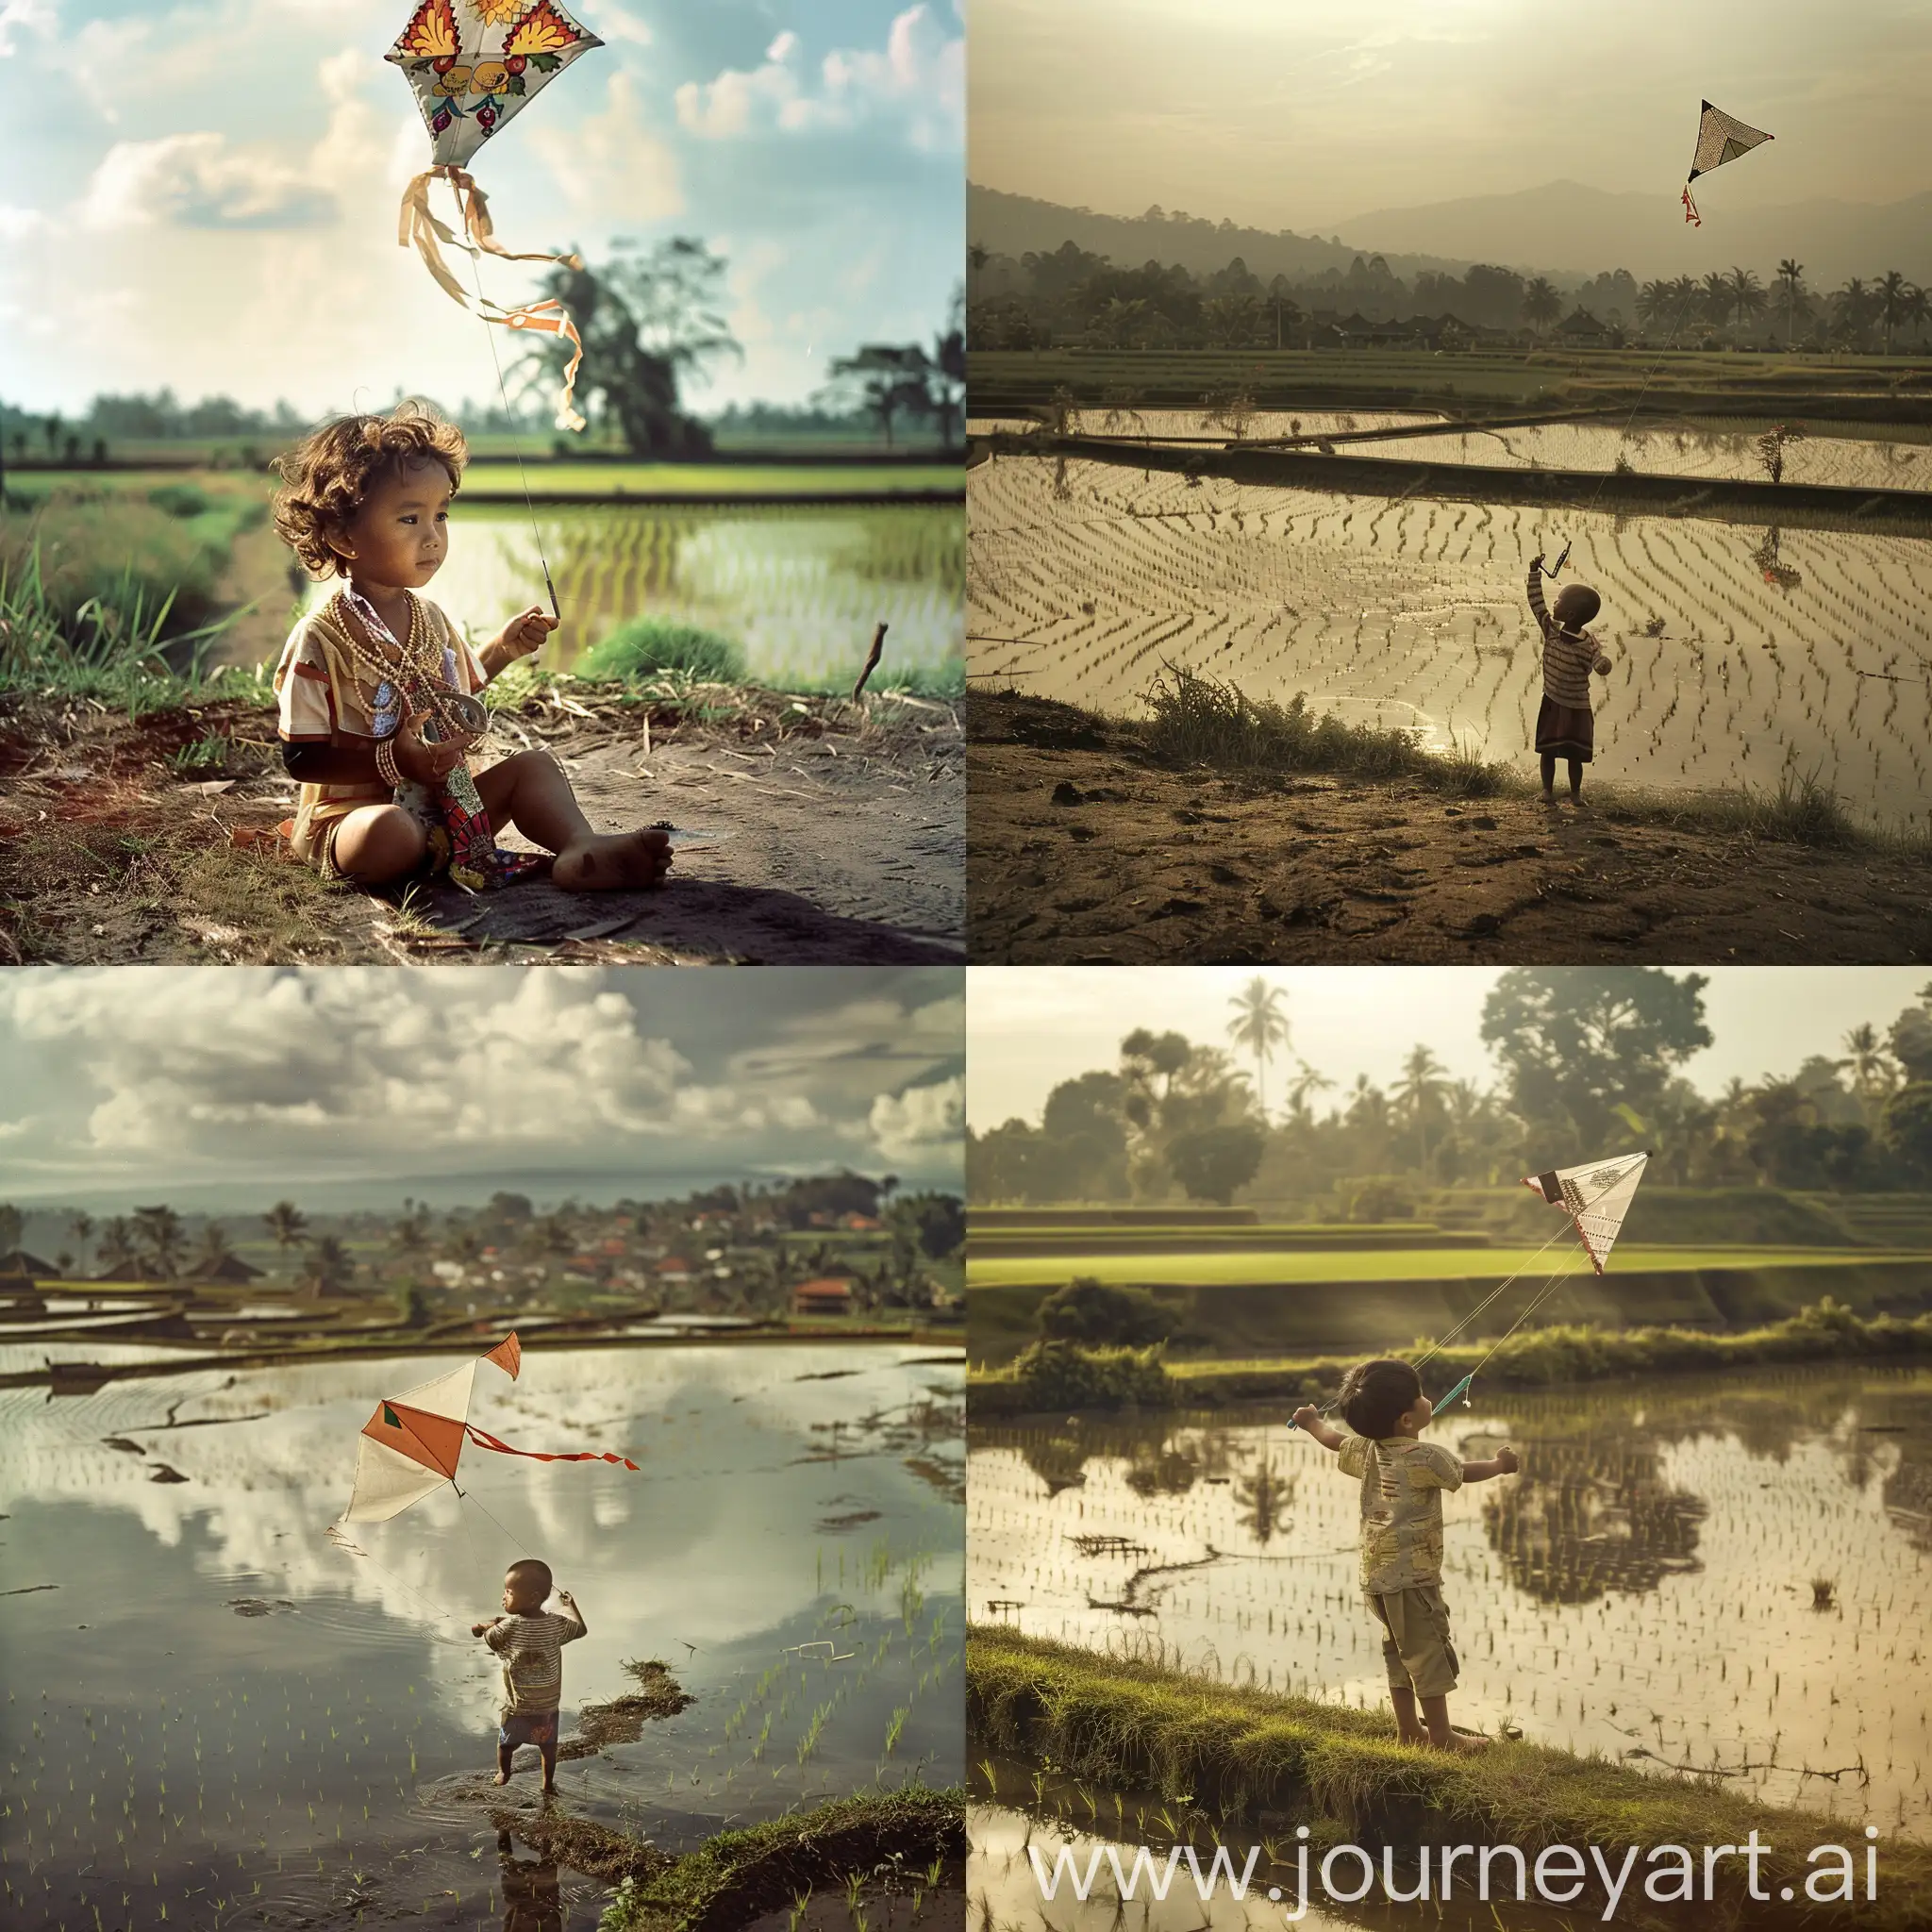 Joyful-Javanese-Child-Flying-Kite-Amidst-Indonesian-Rice-Fields